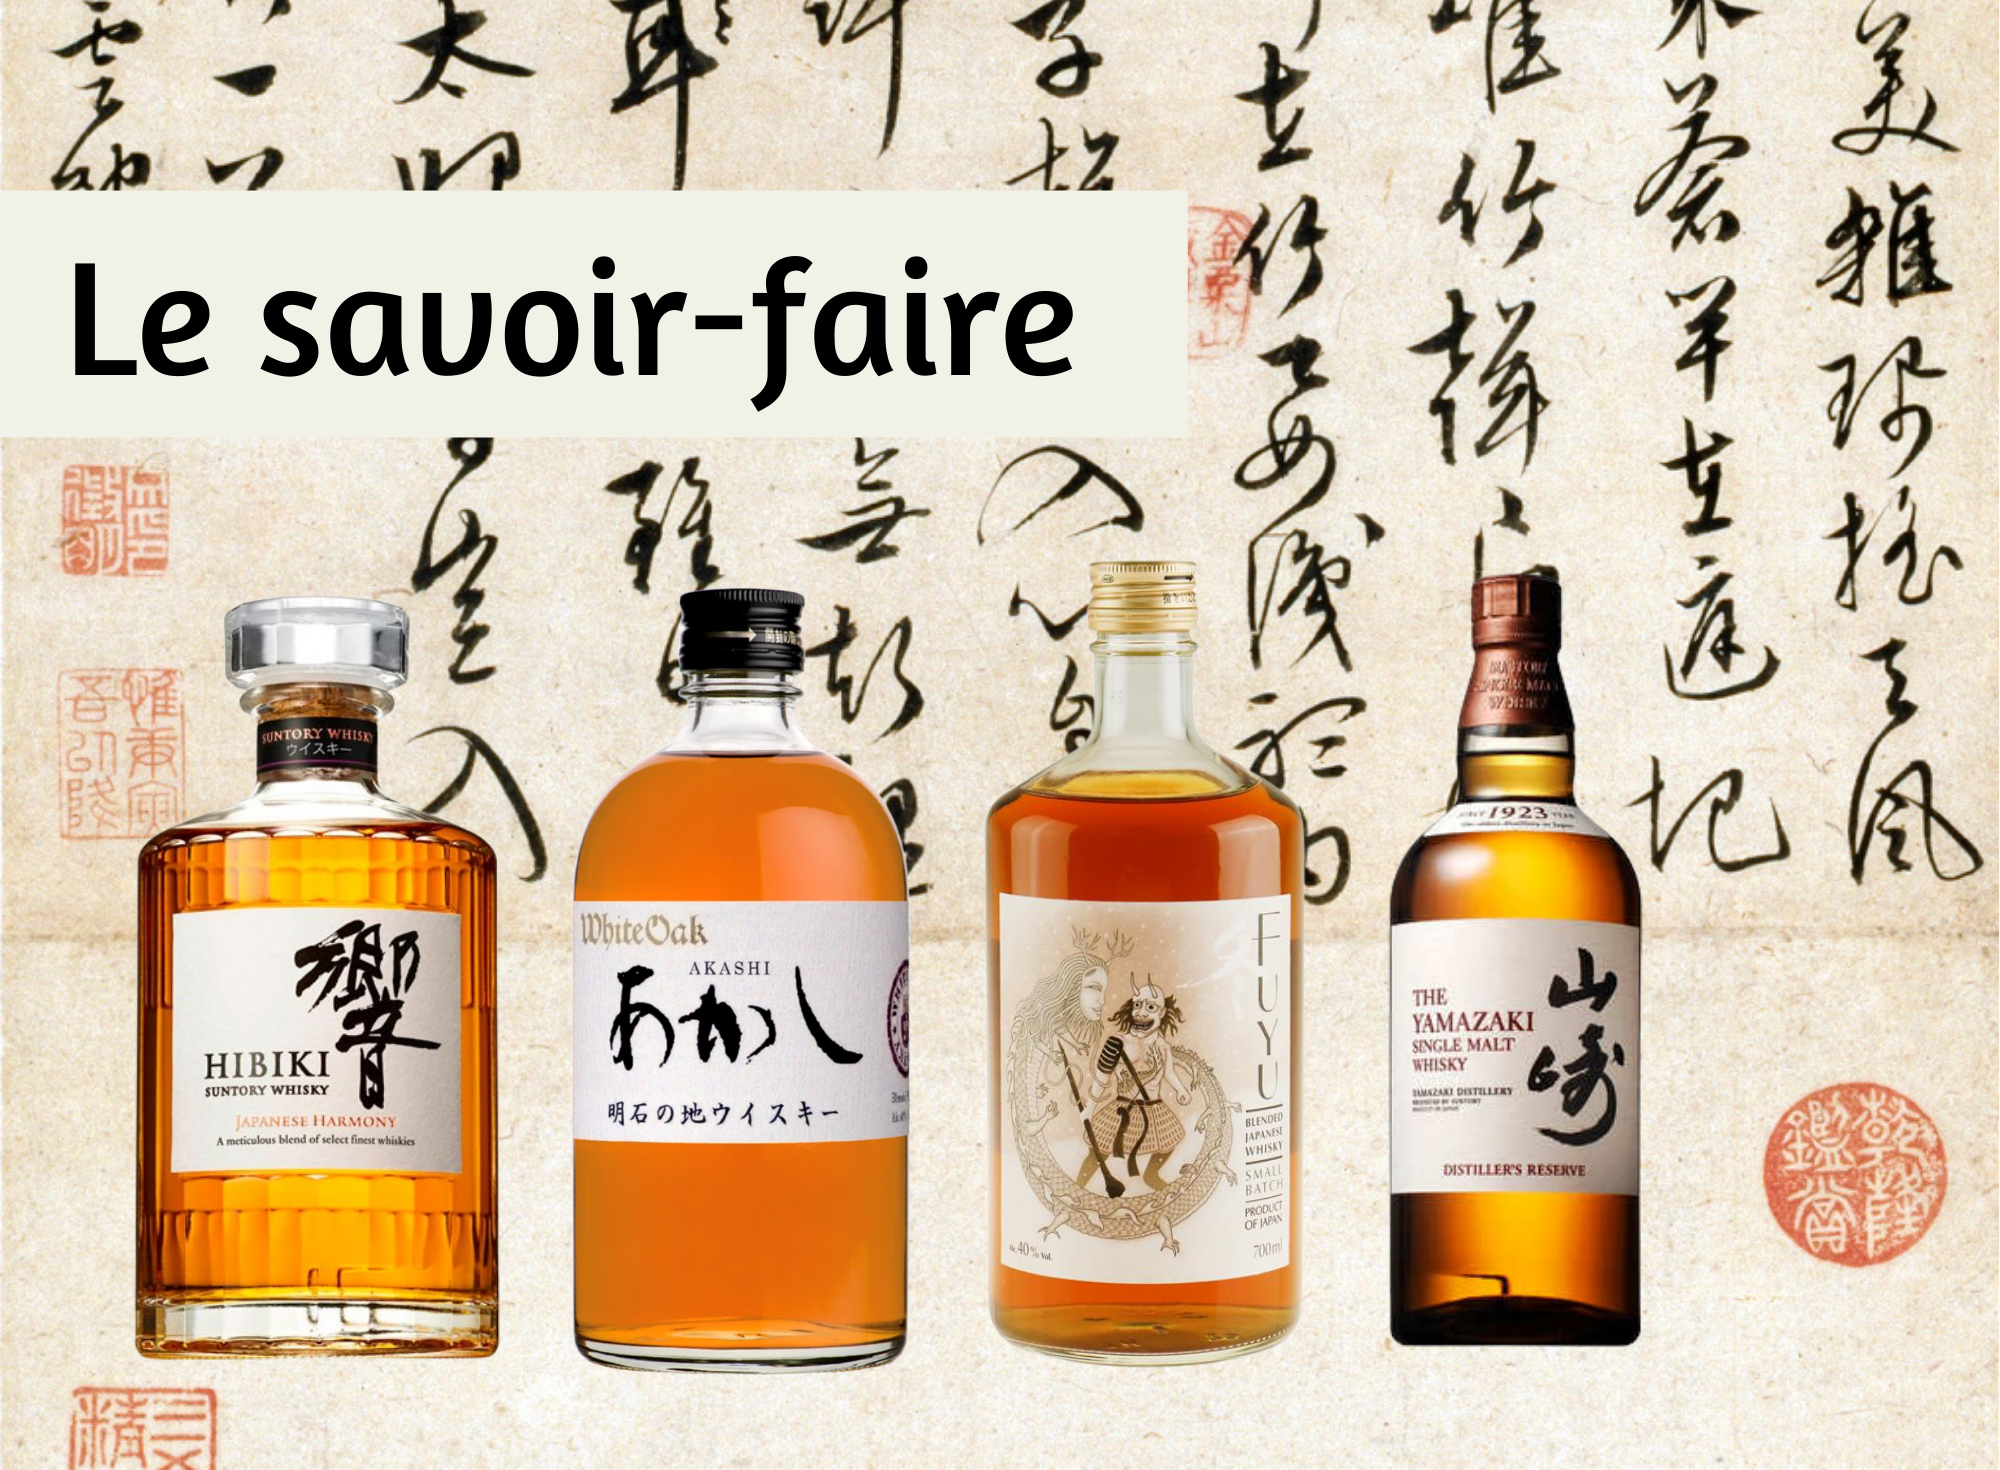 Coffret whisky Tokinoka 2 verres Japon 